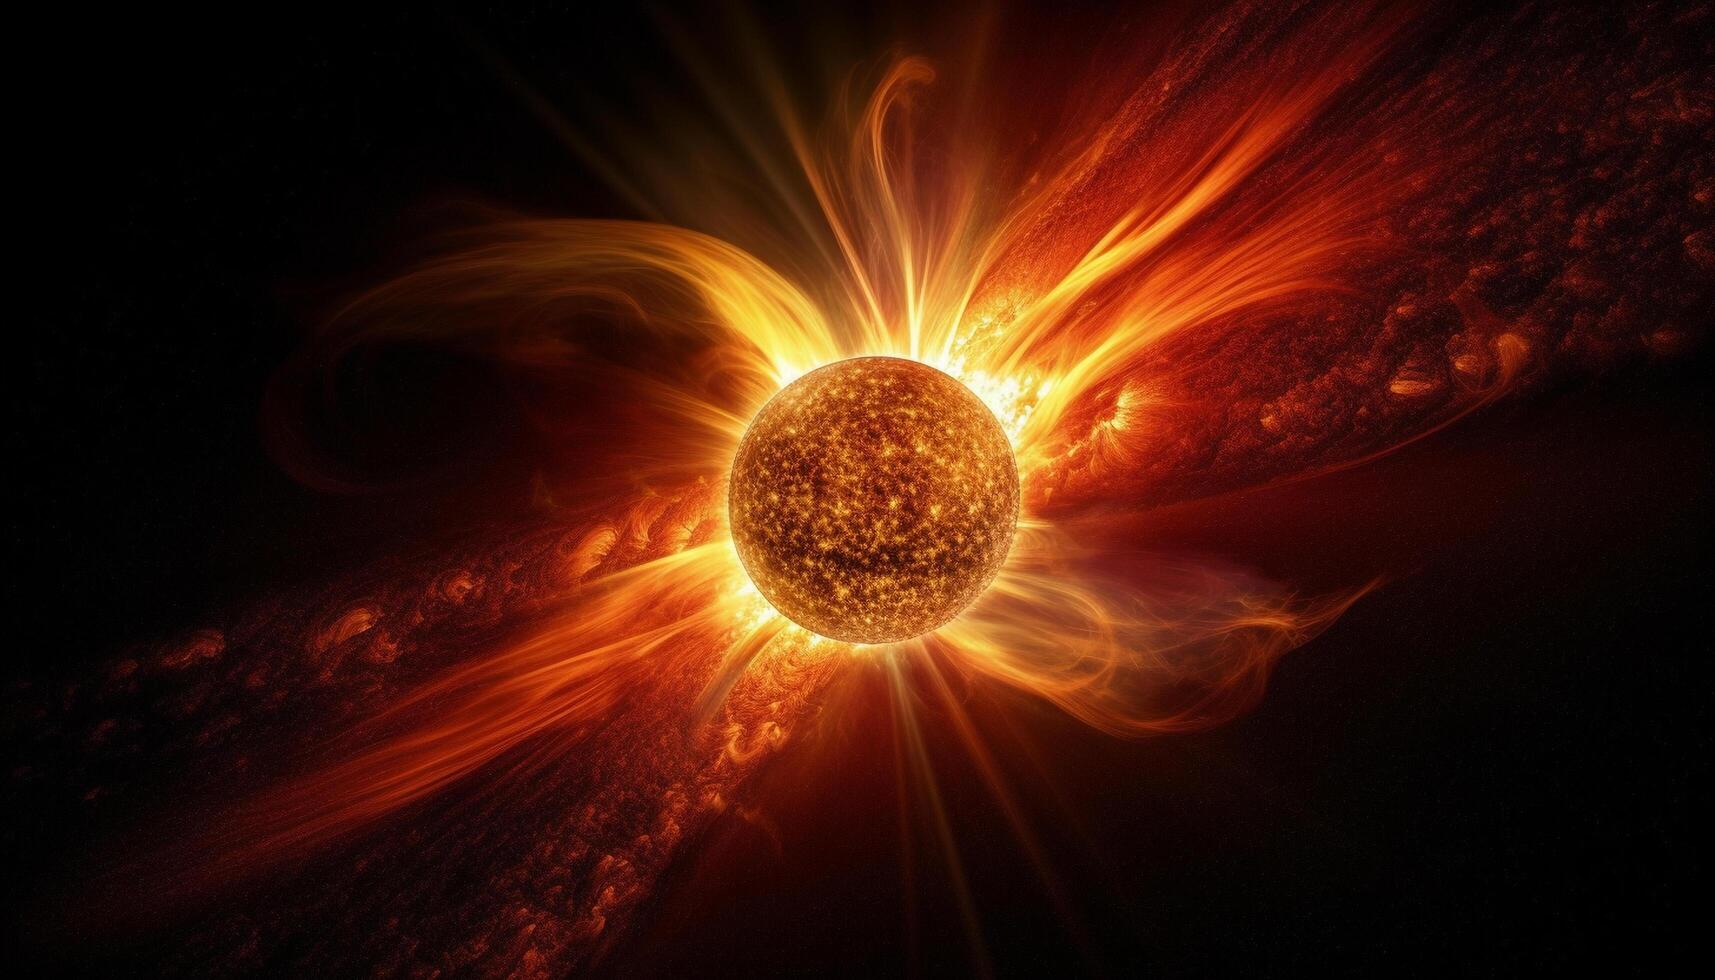 Exploding galaxy illuminates natural phenomenon in futuristic space illustration generated by AI photo